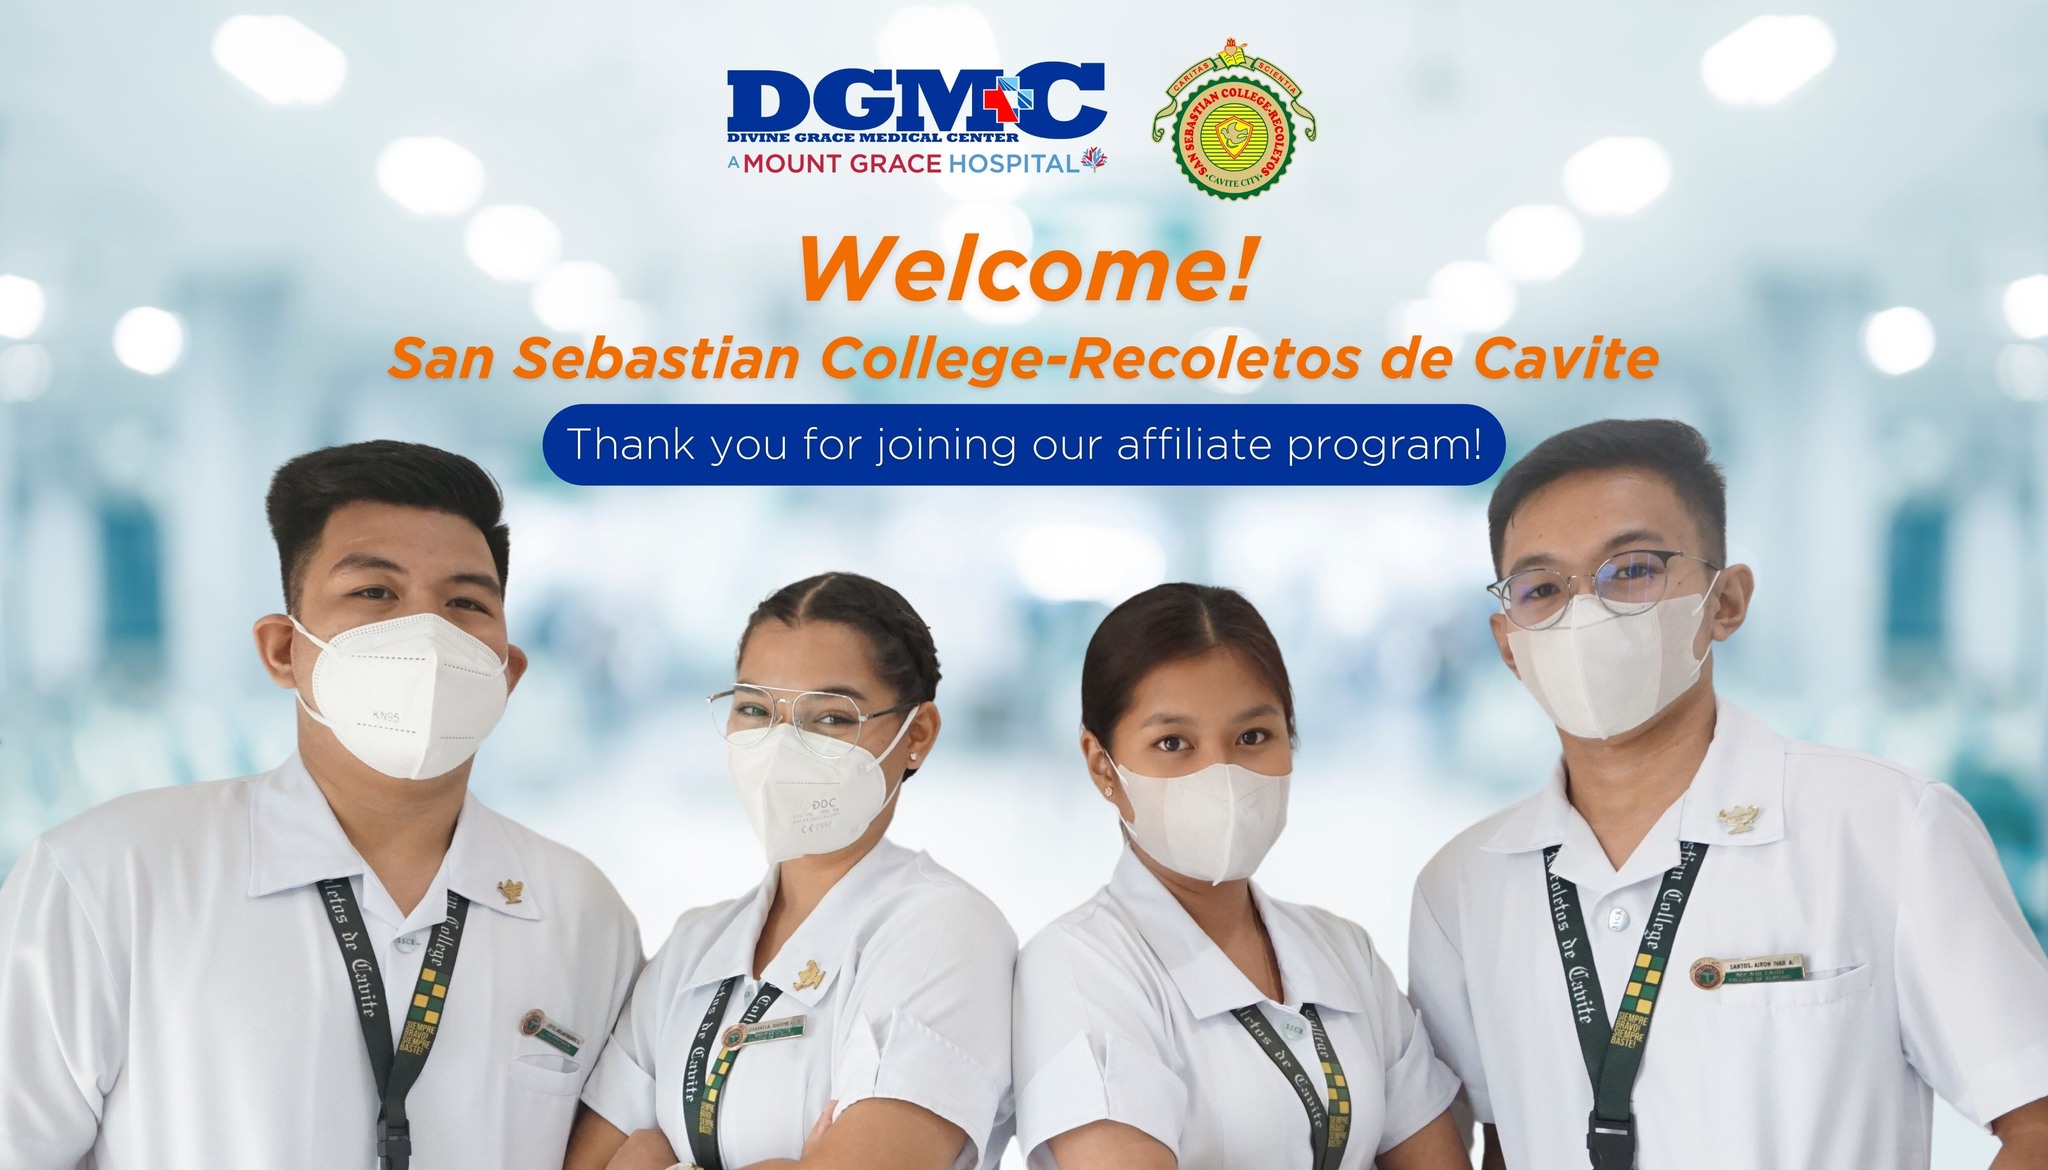 San Sebastian College-Recoletos de Cavite joined our school affiliate  program - Divine Grace Medical Center (DGMC)